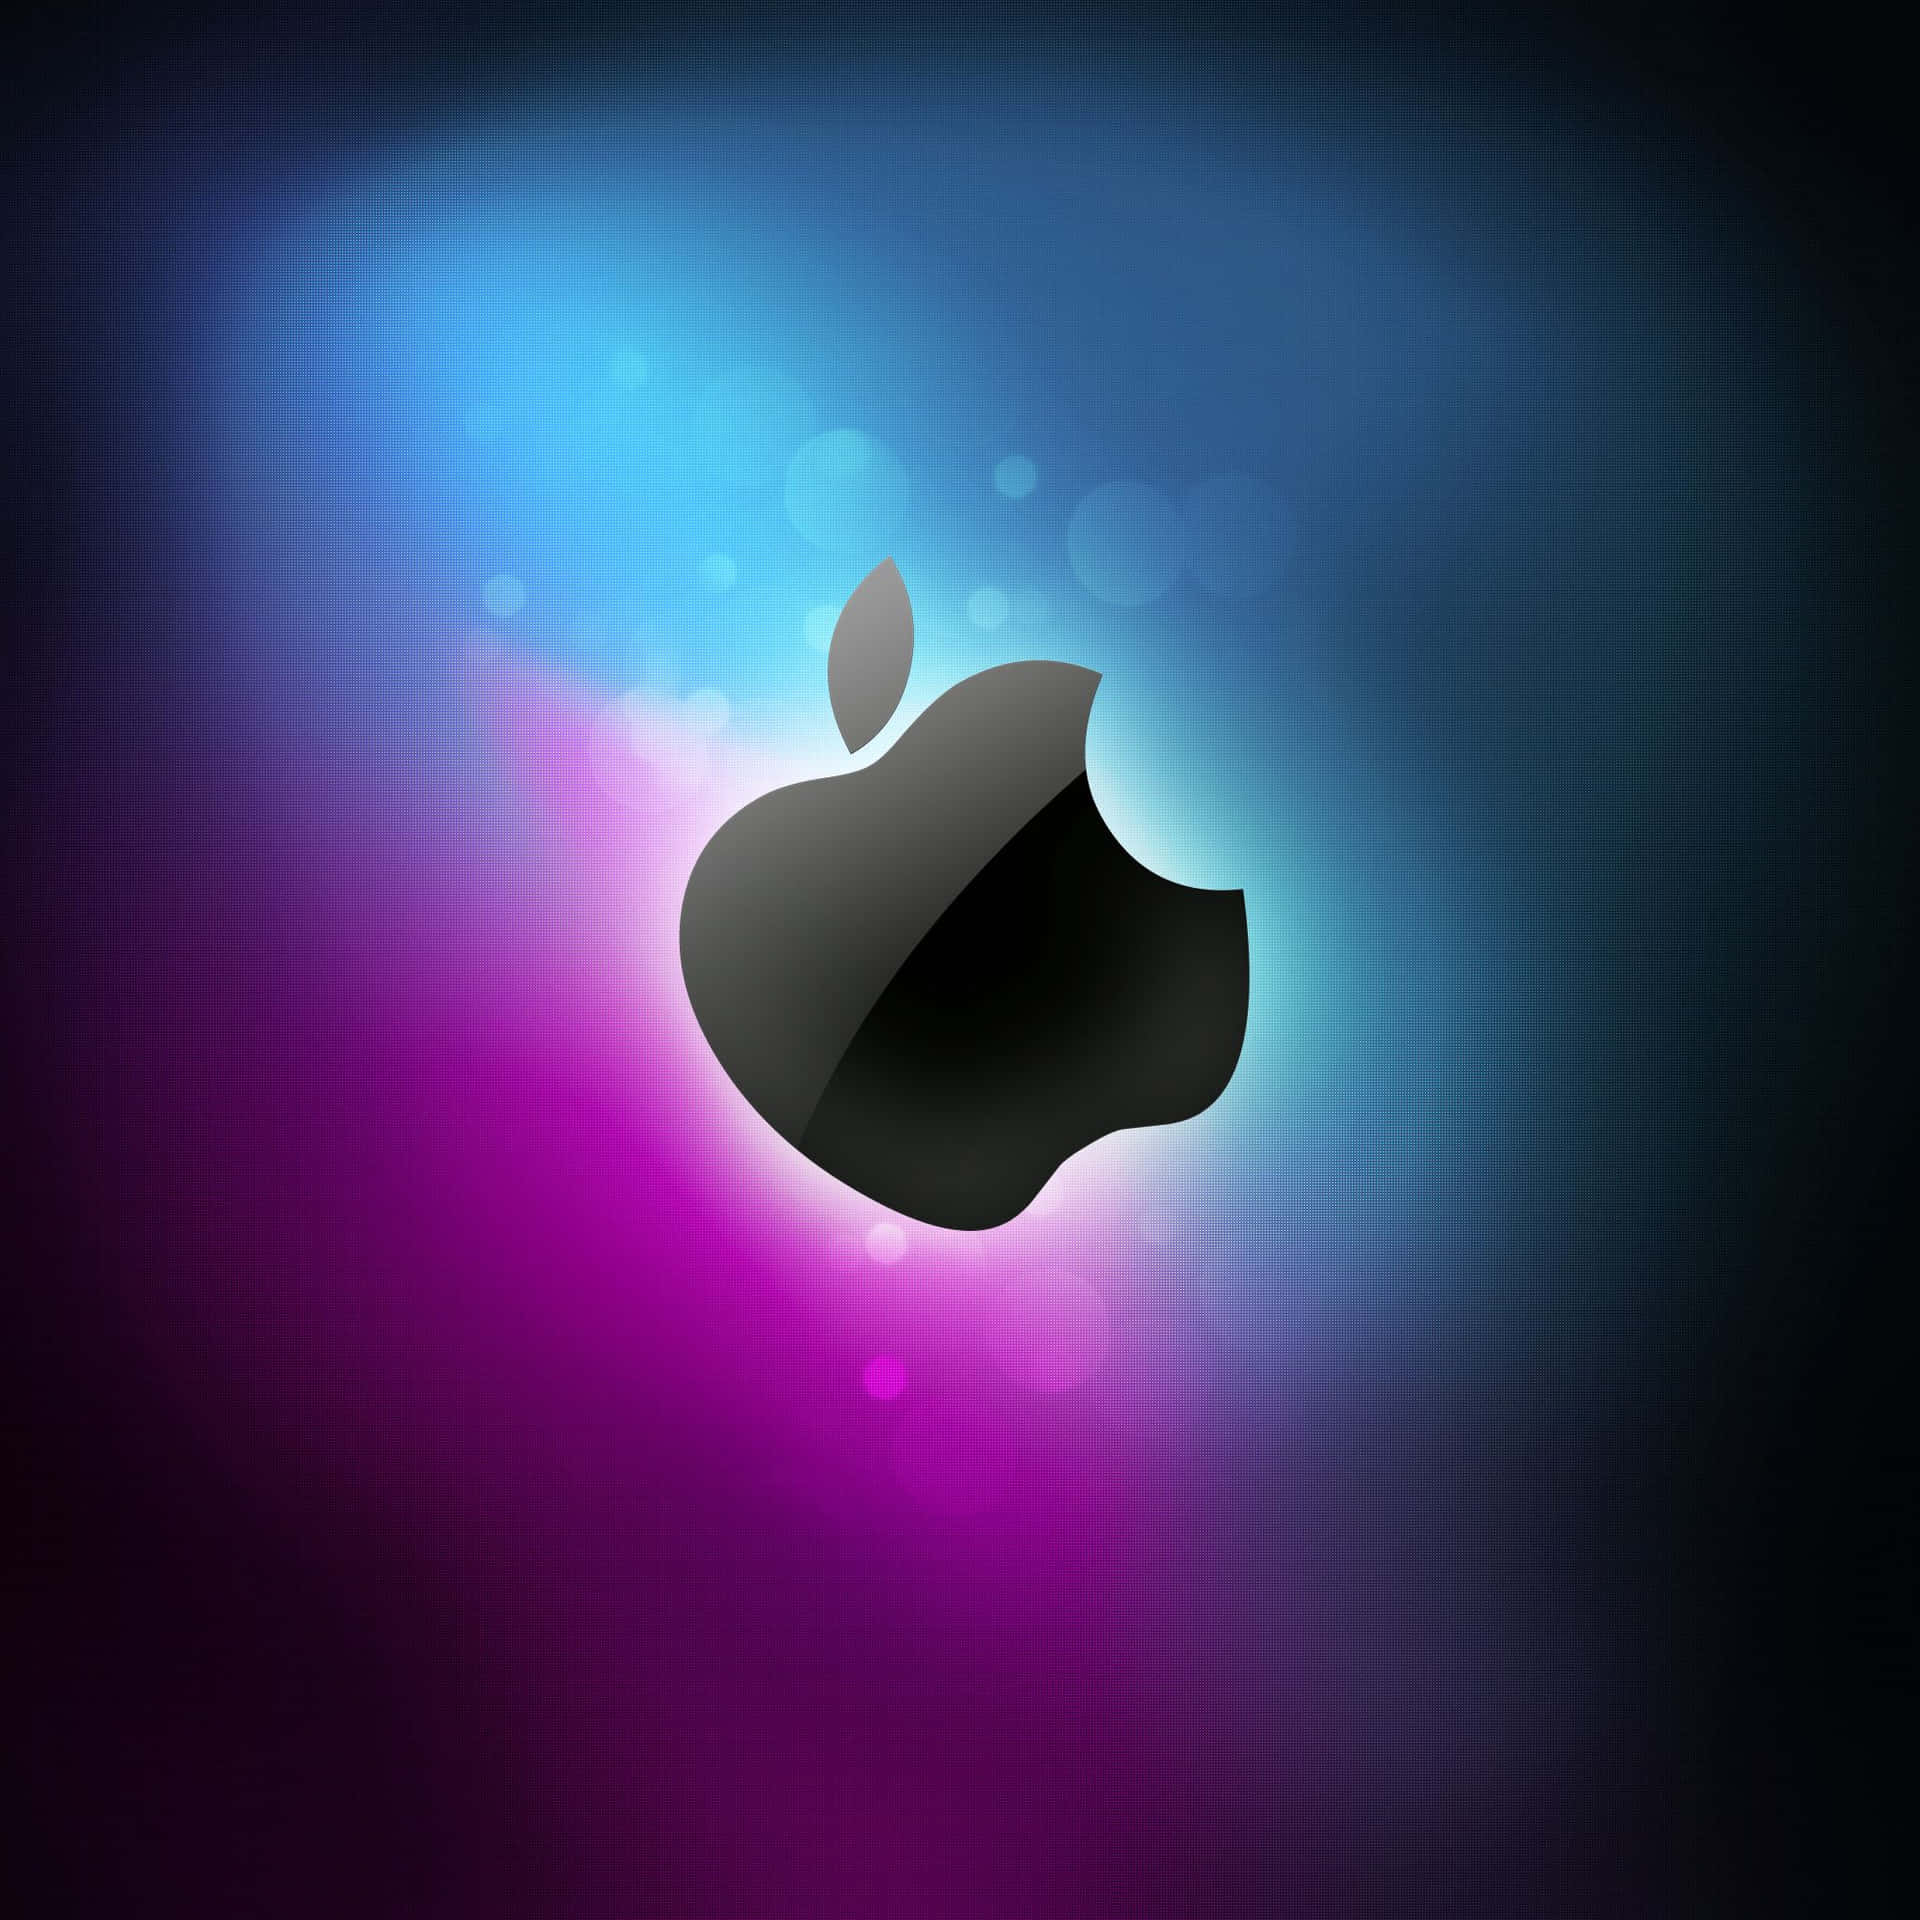 Sleek Apple Logo on Dark Background